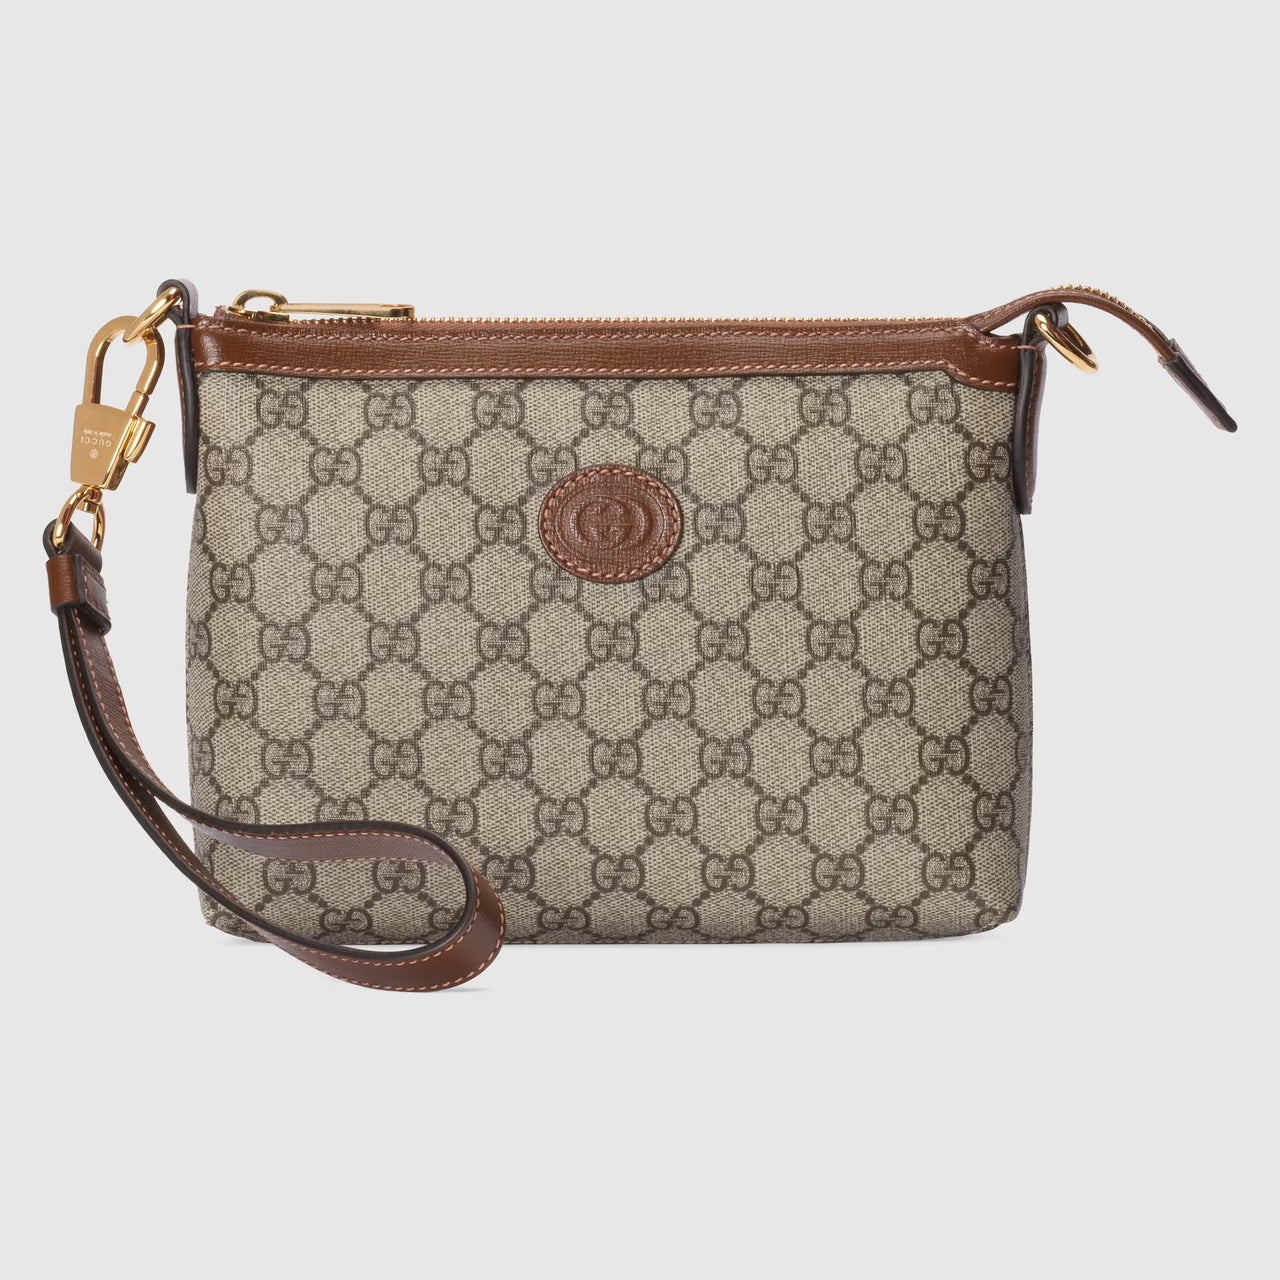 Gucci Messenger Bag with Interlocking G (Beige and Ebony)